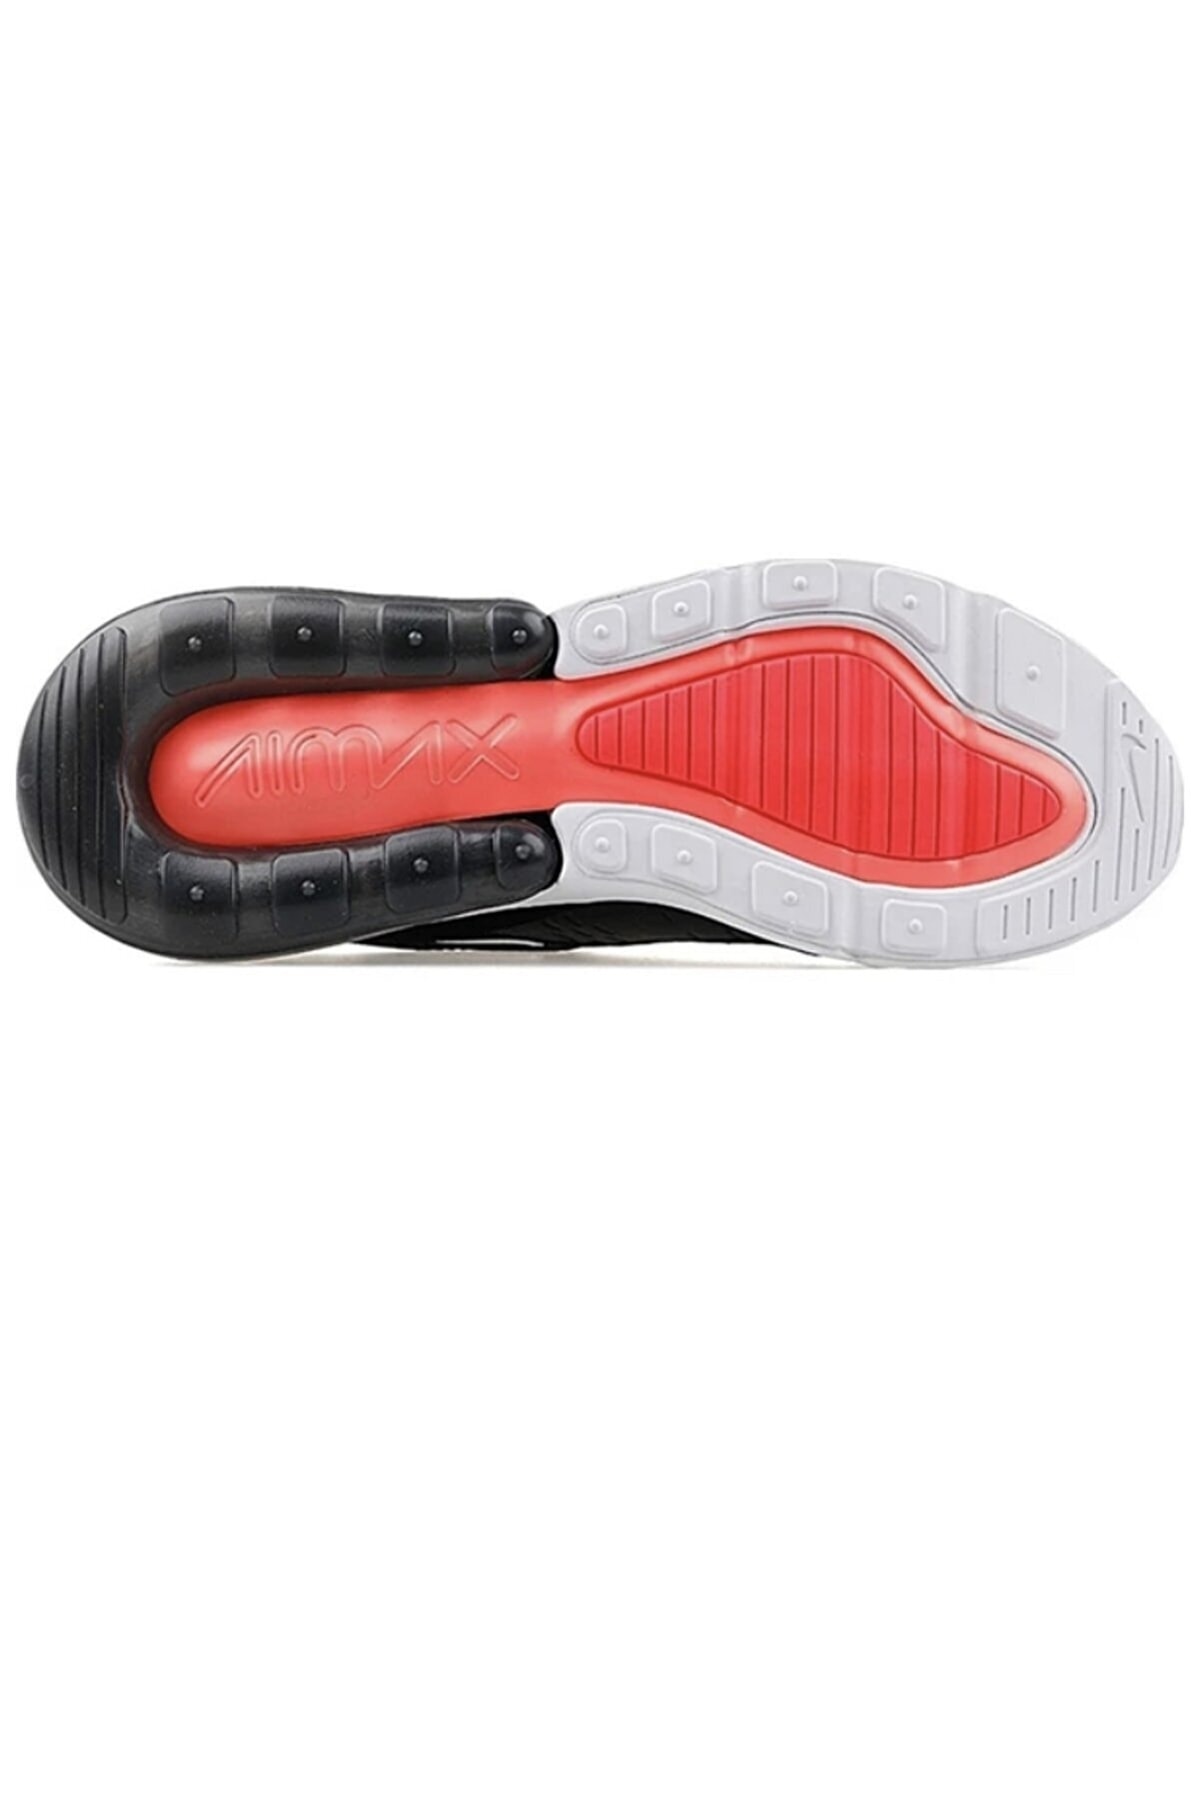 Nike Air Max 270 Erkek Ayakkabısı OH5872